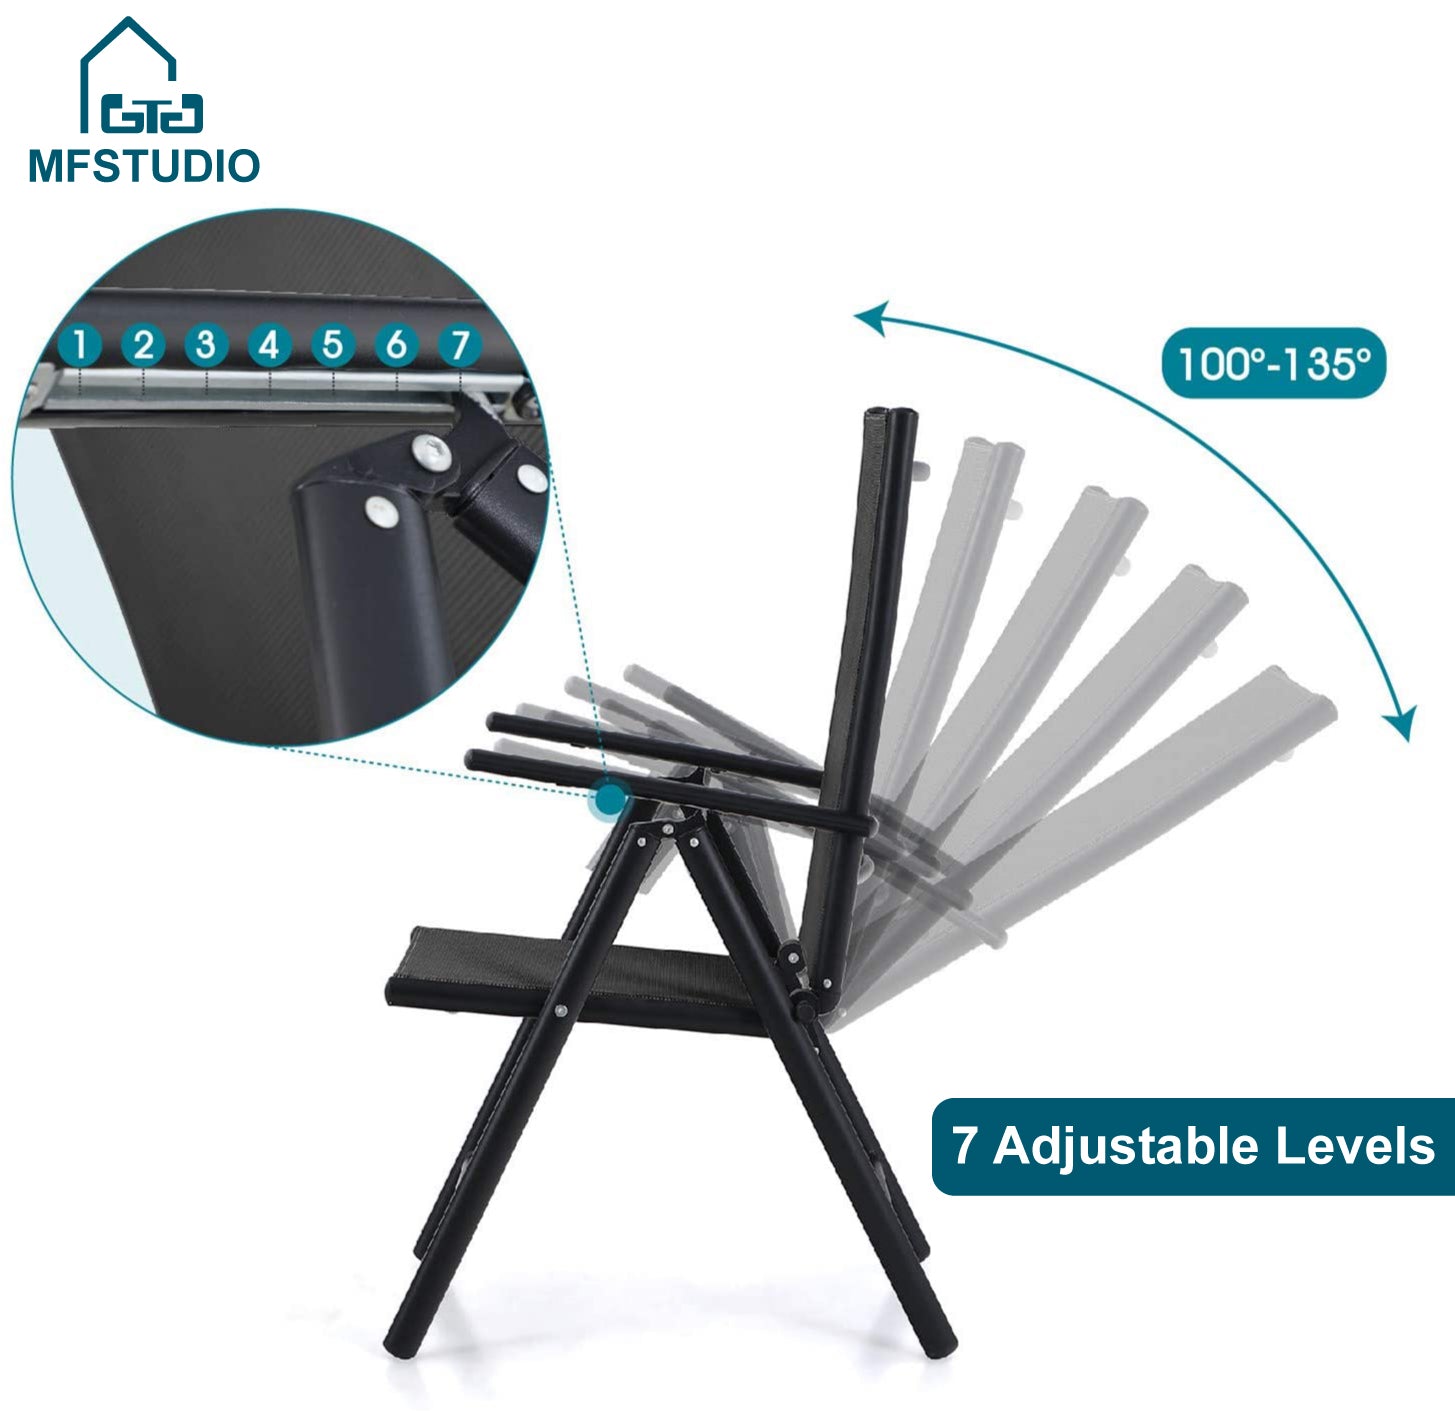 MF Studio 2-Piece Aluminum Outdoor Patio Folding Chairs with Textilene Seat, Black - image 5 of 10